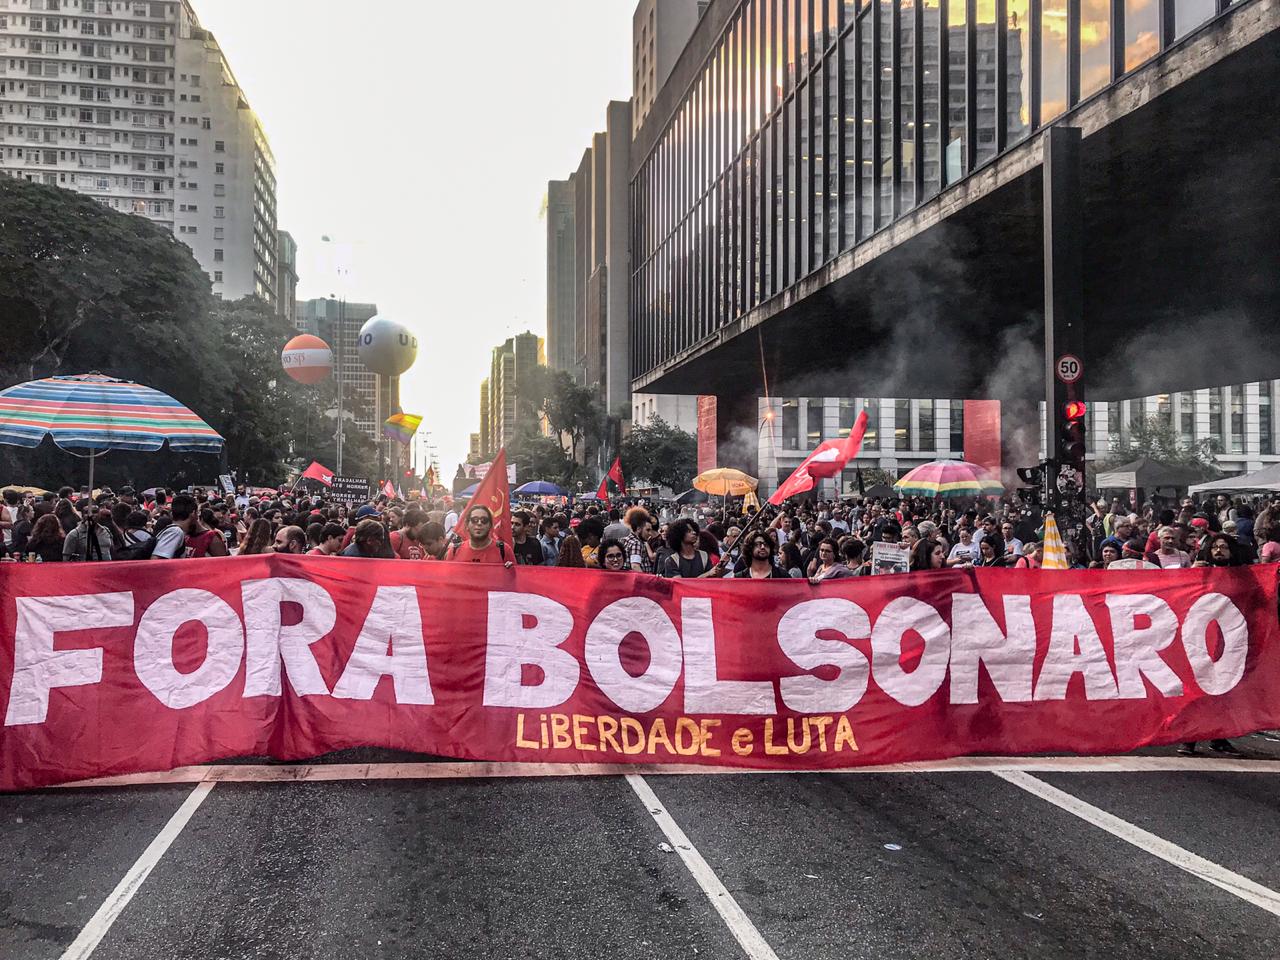 14 June Sao Paulo Image Liberdade e Luta